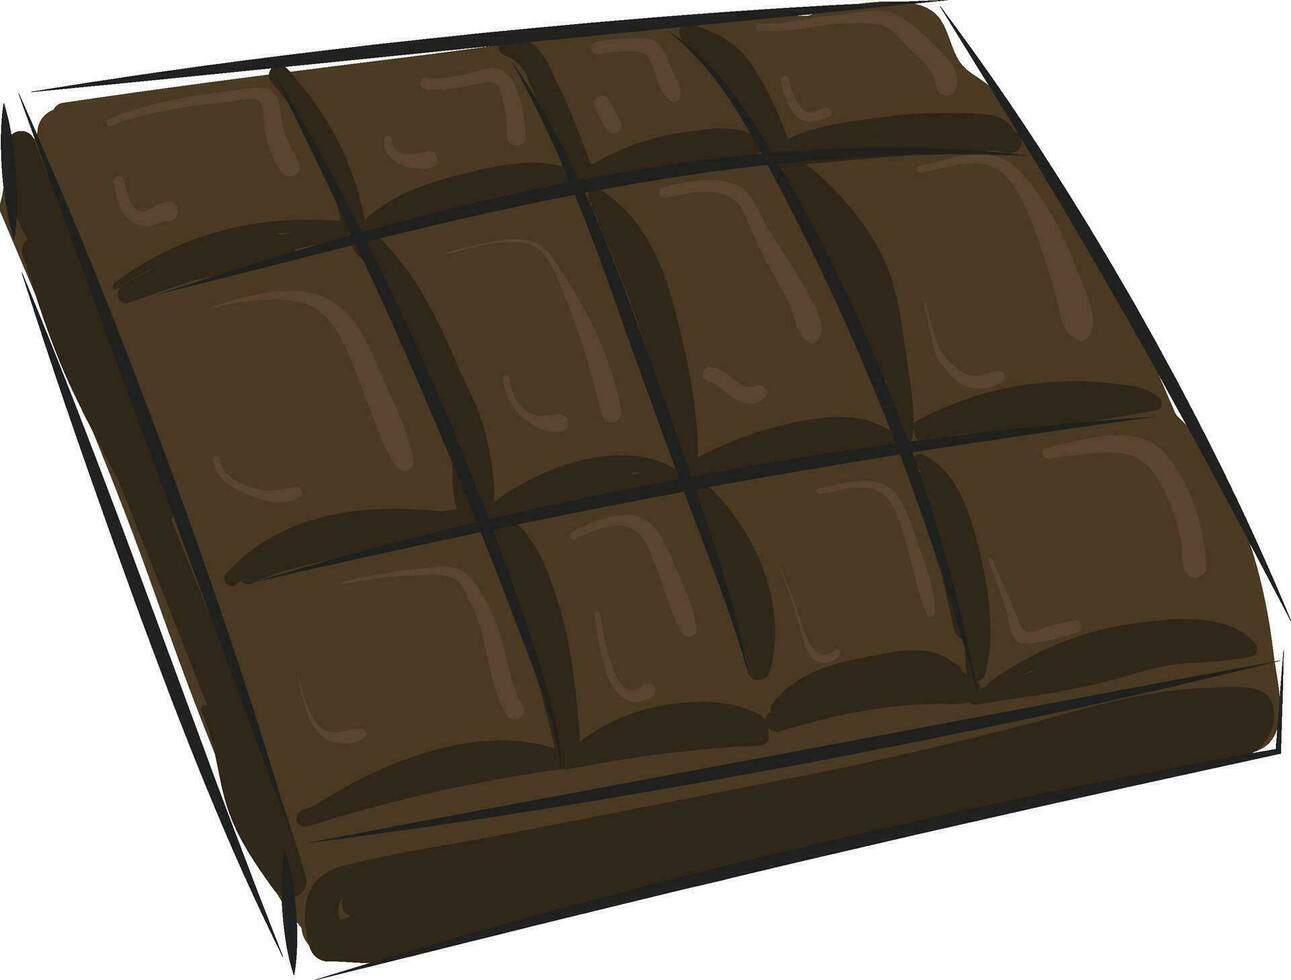 imagen de chocolate - Leche chocolate, vector o color ilustración.